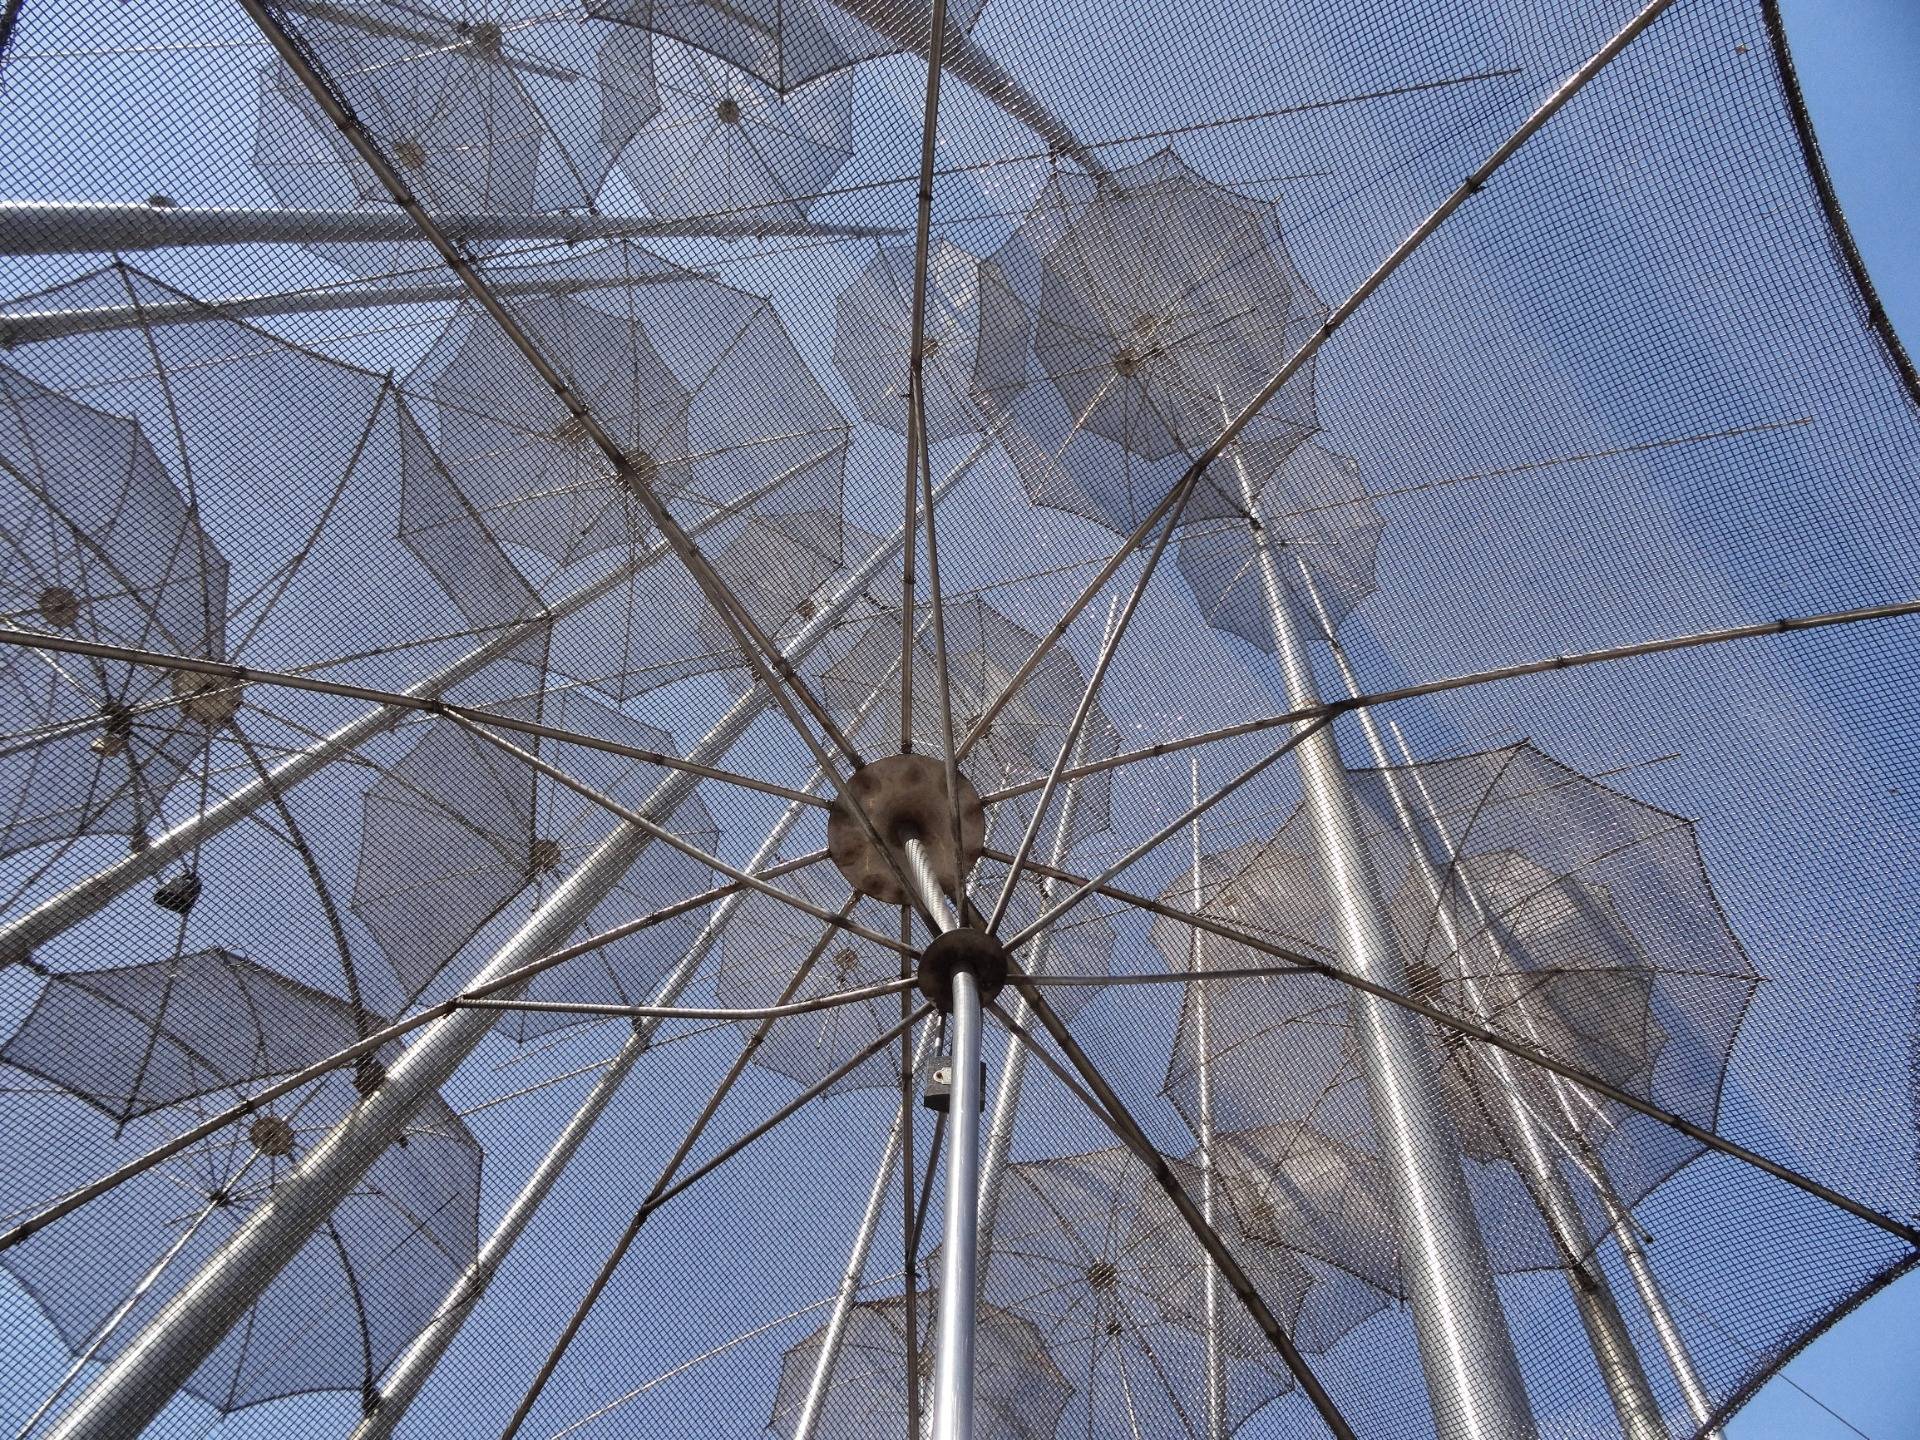 The umbrellas are art